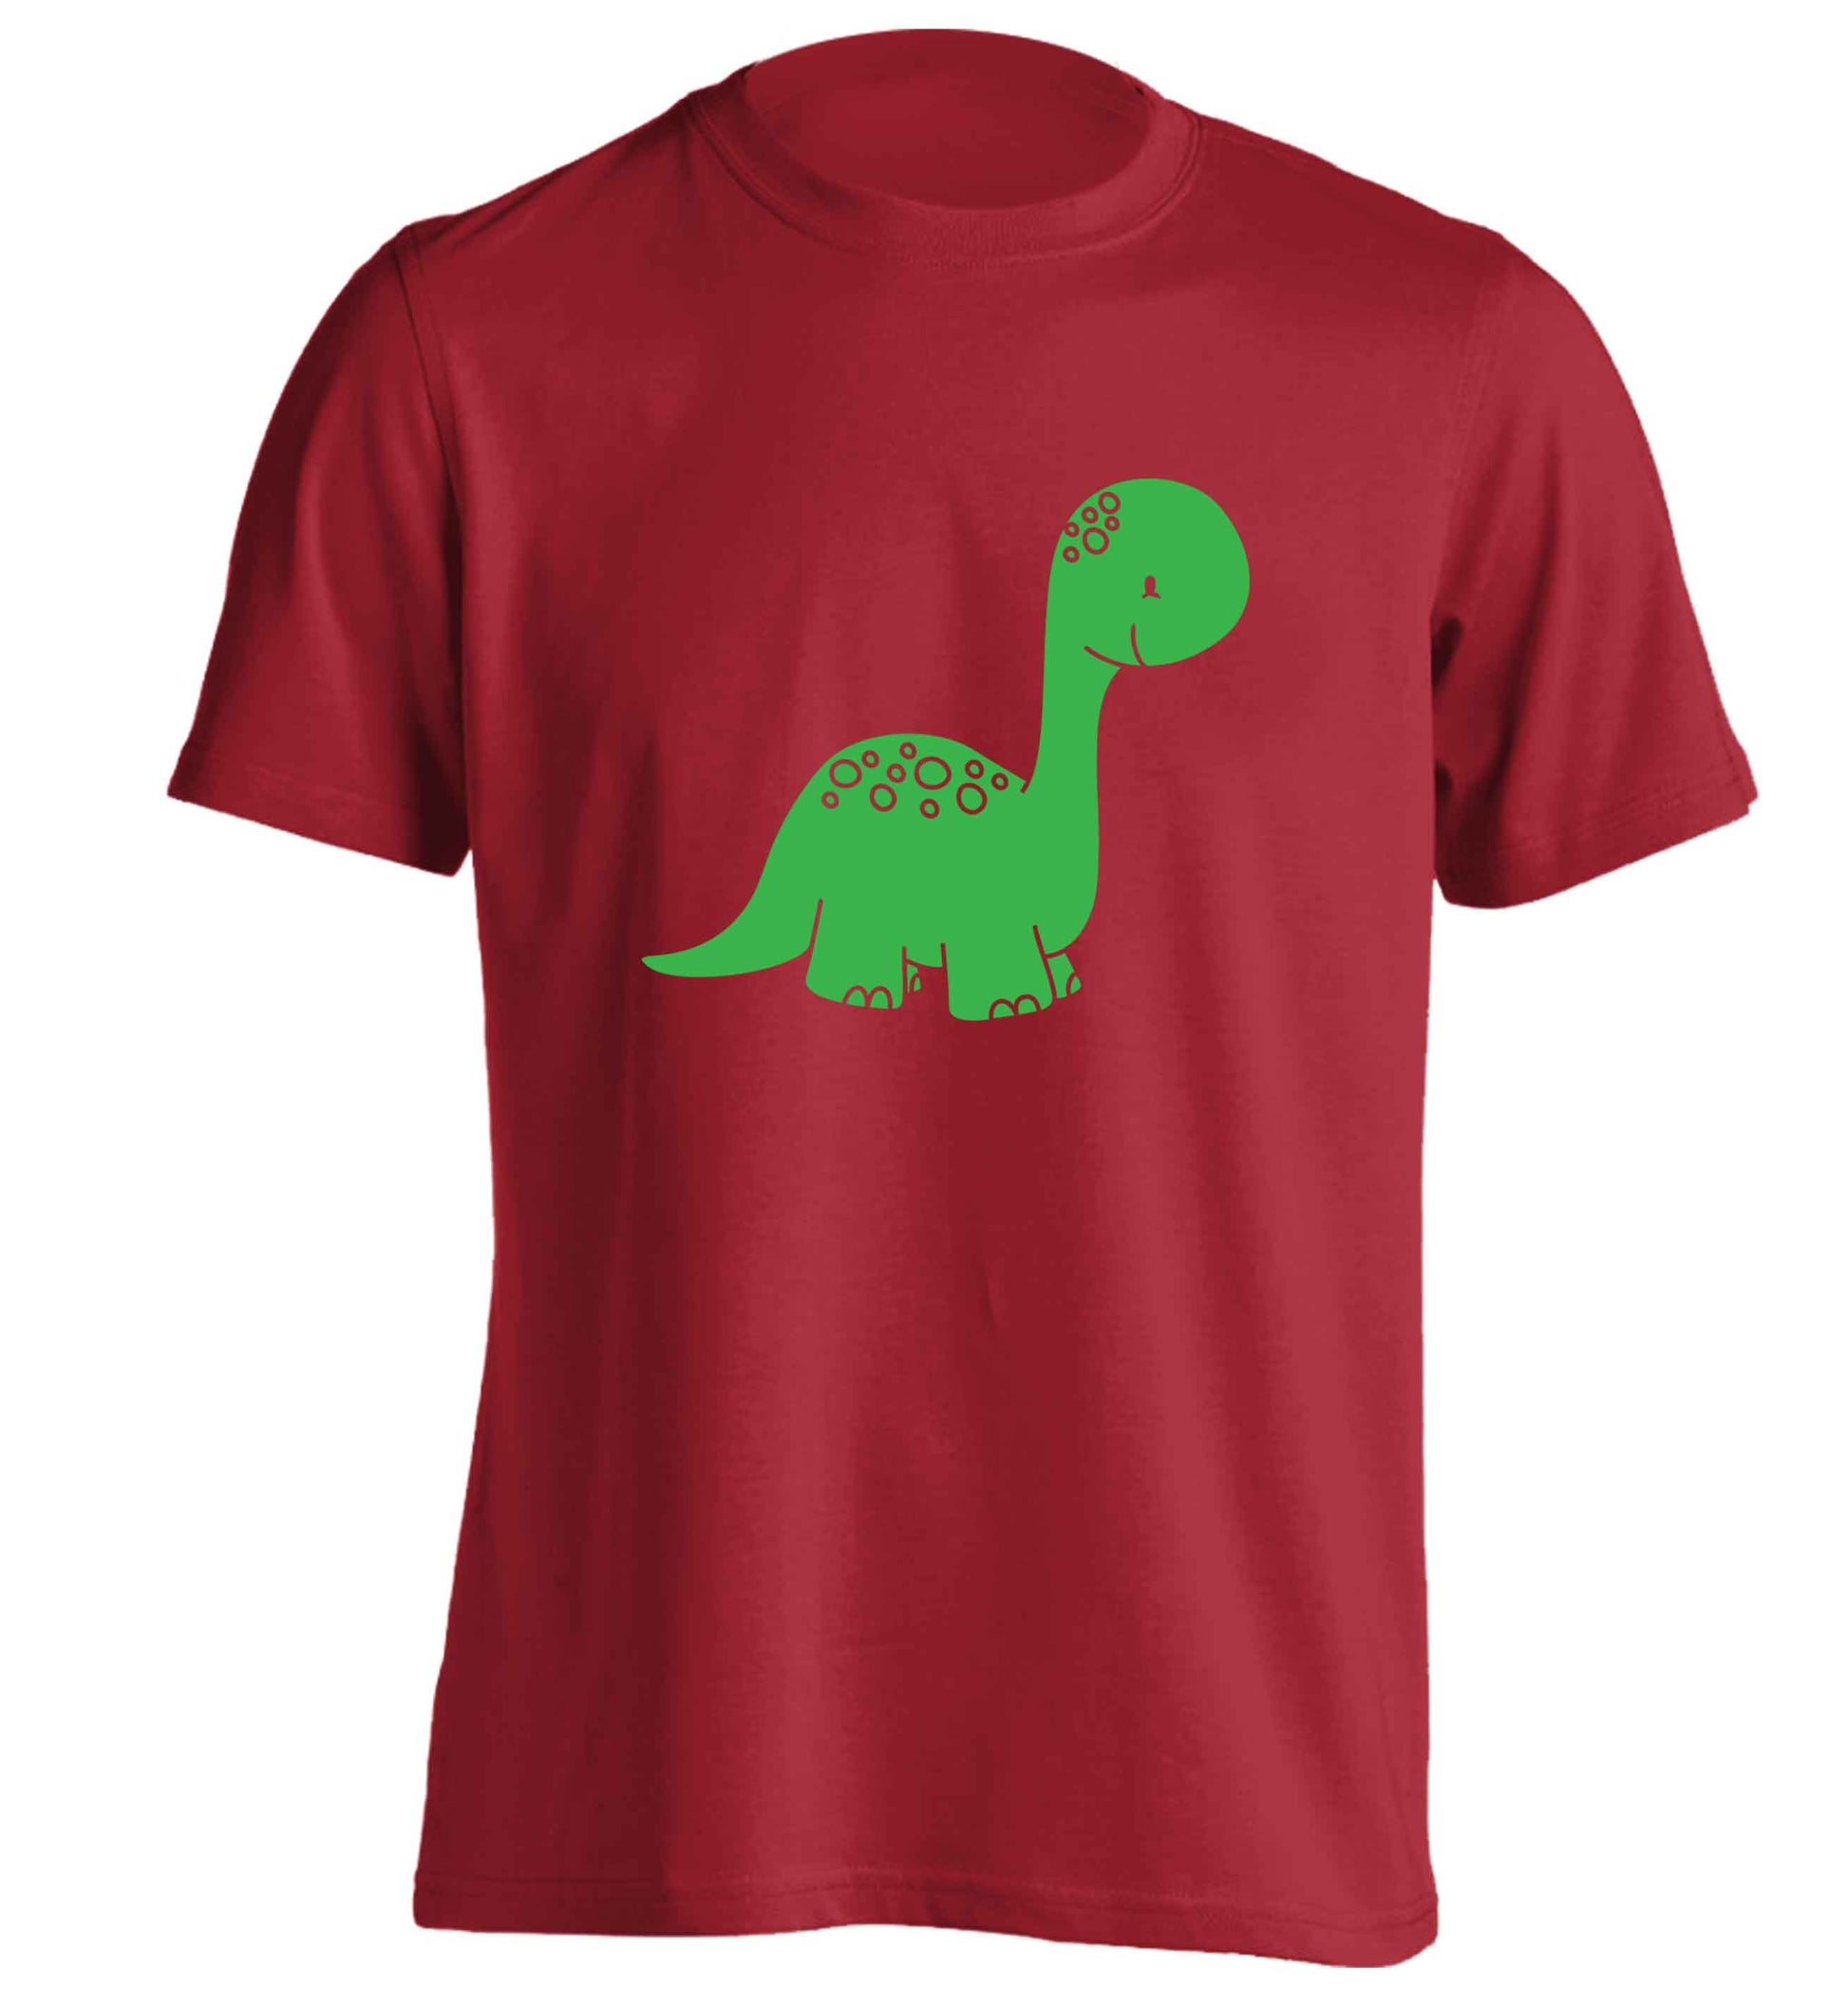 Dinosaur illustration adults unisex red Tshirt 2XL